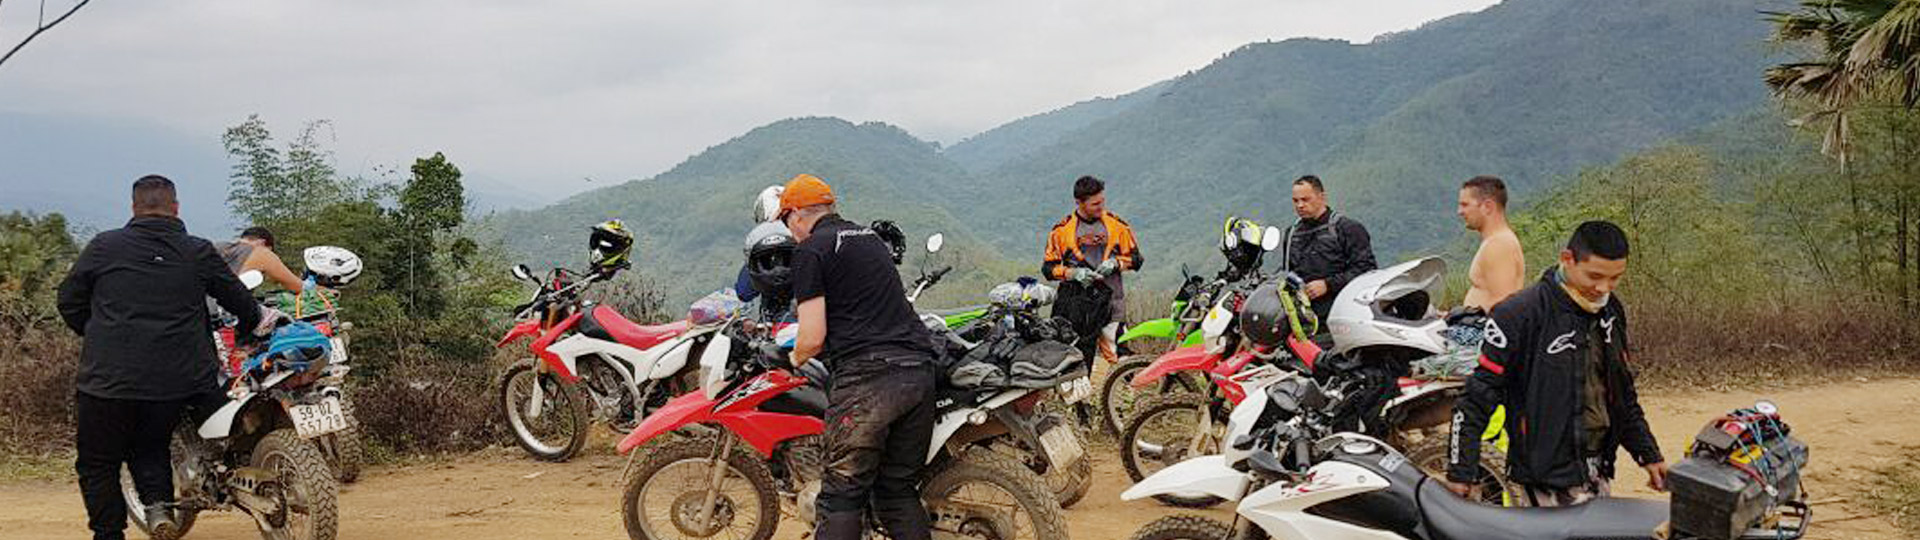 Myanmar - Shan State Exploration Motorbike Tour  - 10 days